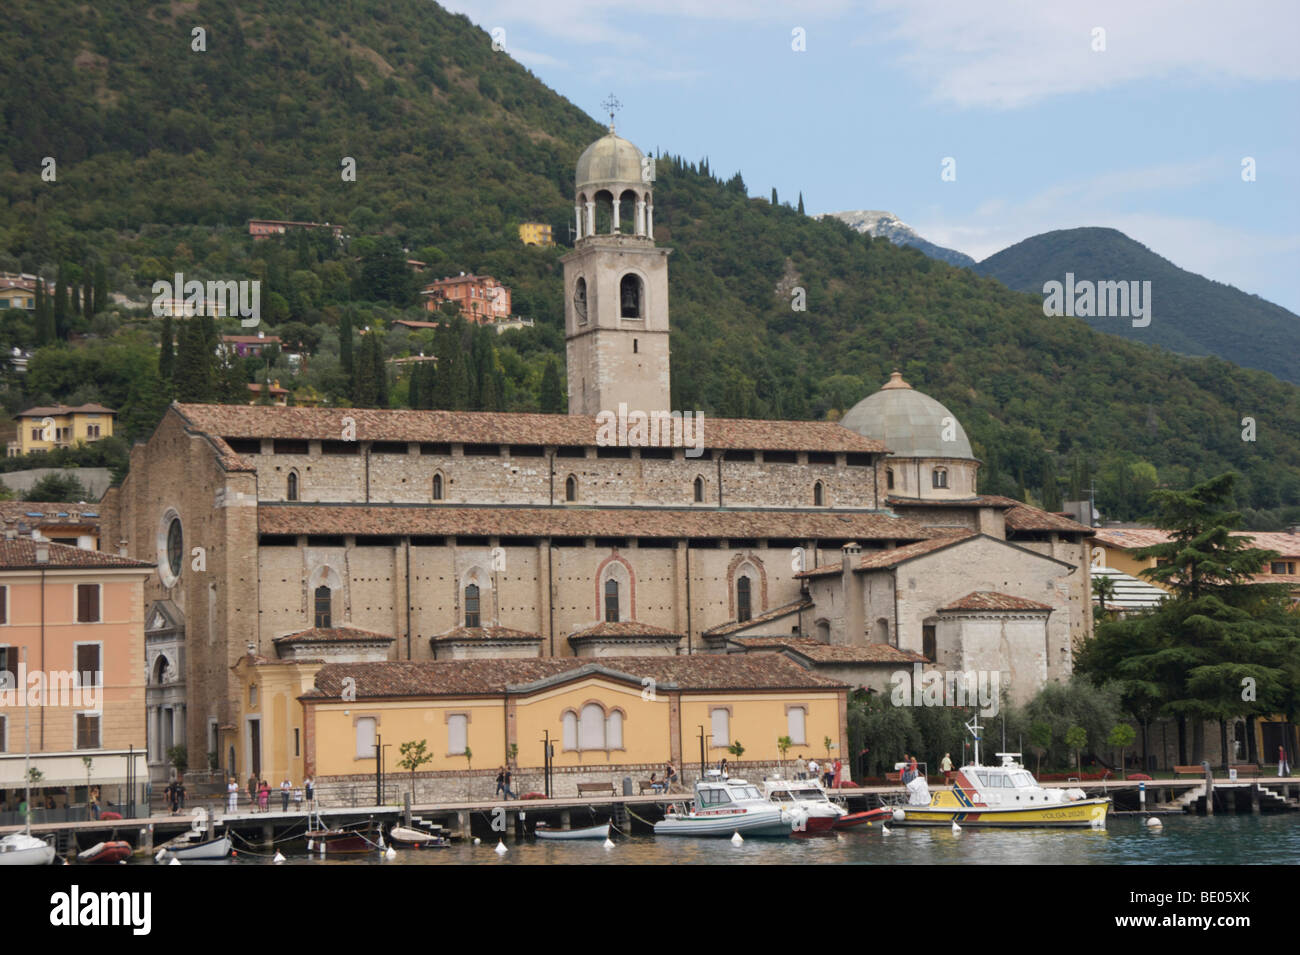 The Duomo Cathedral In Salo Lake Garda Italy Stock Photo Alamy